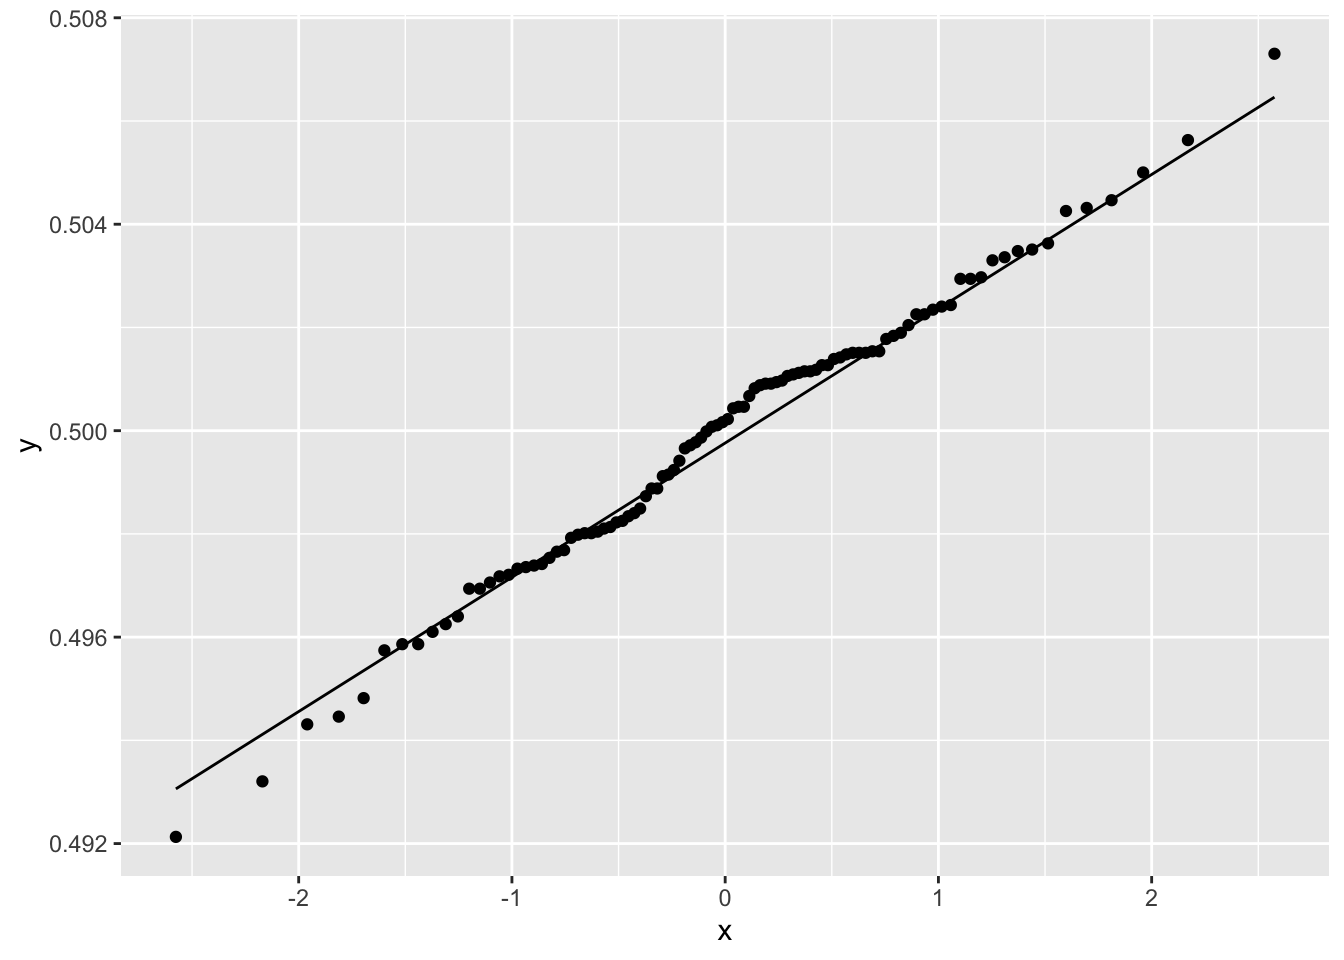 Normal Quantile Plot of Average Number of Female Babies